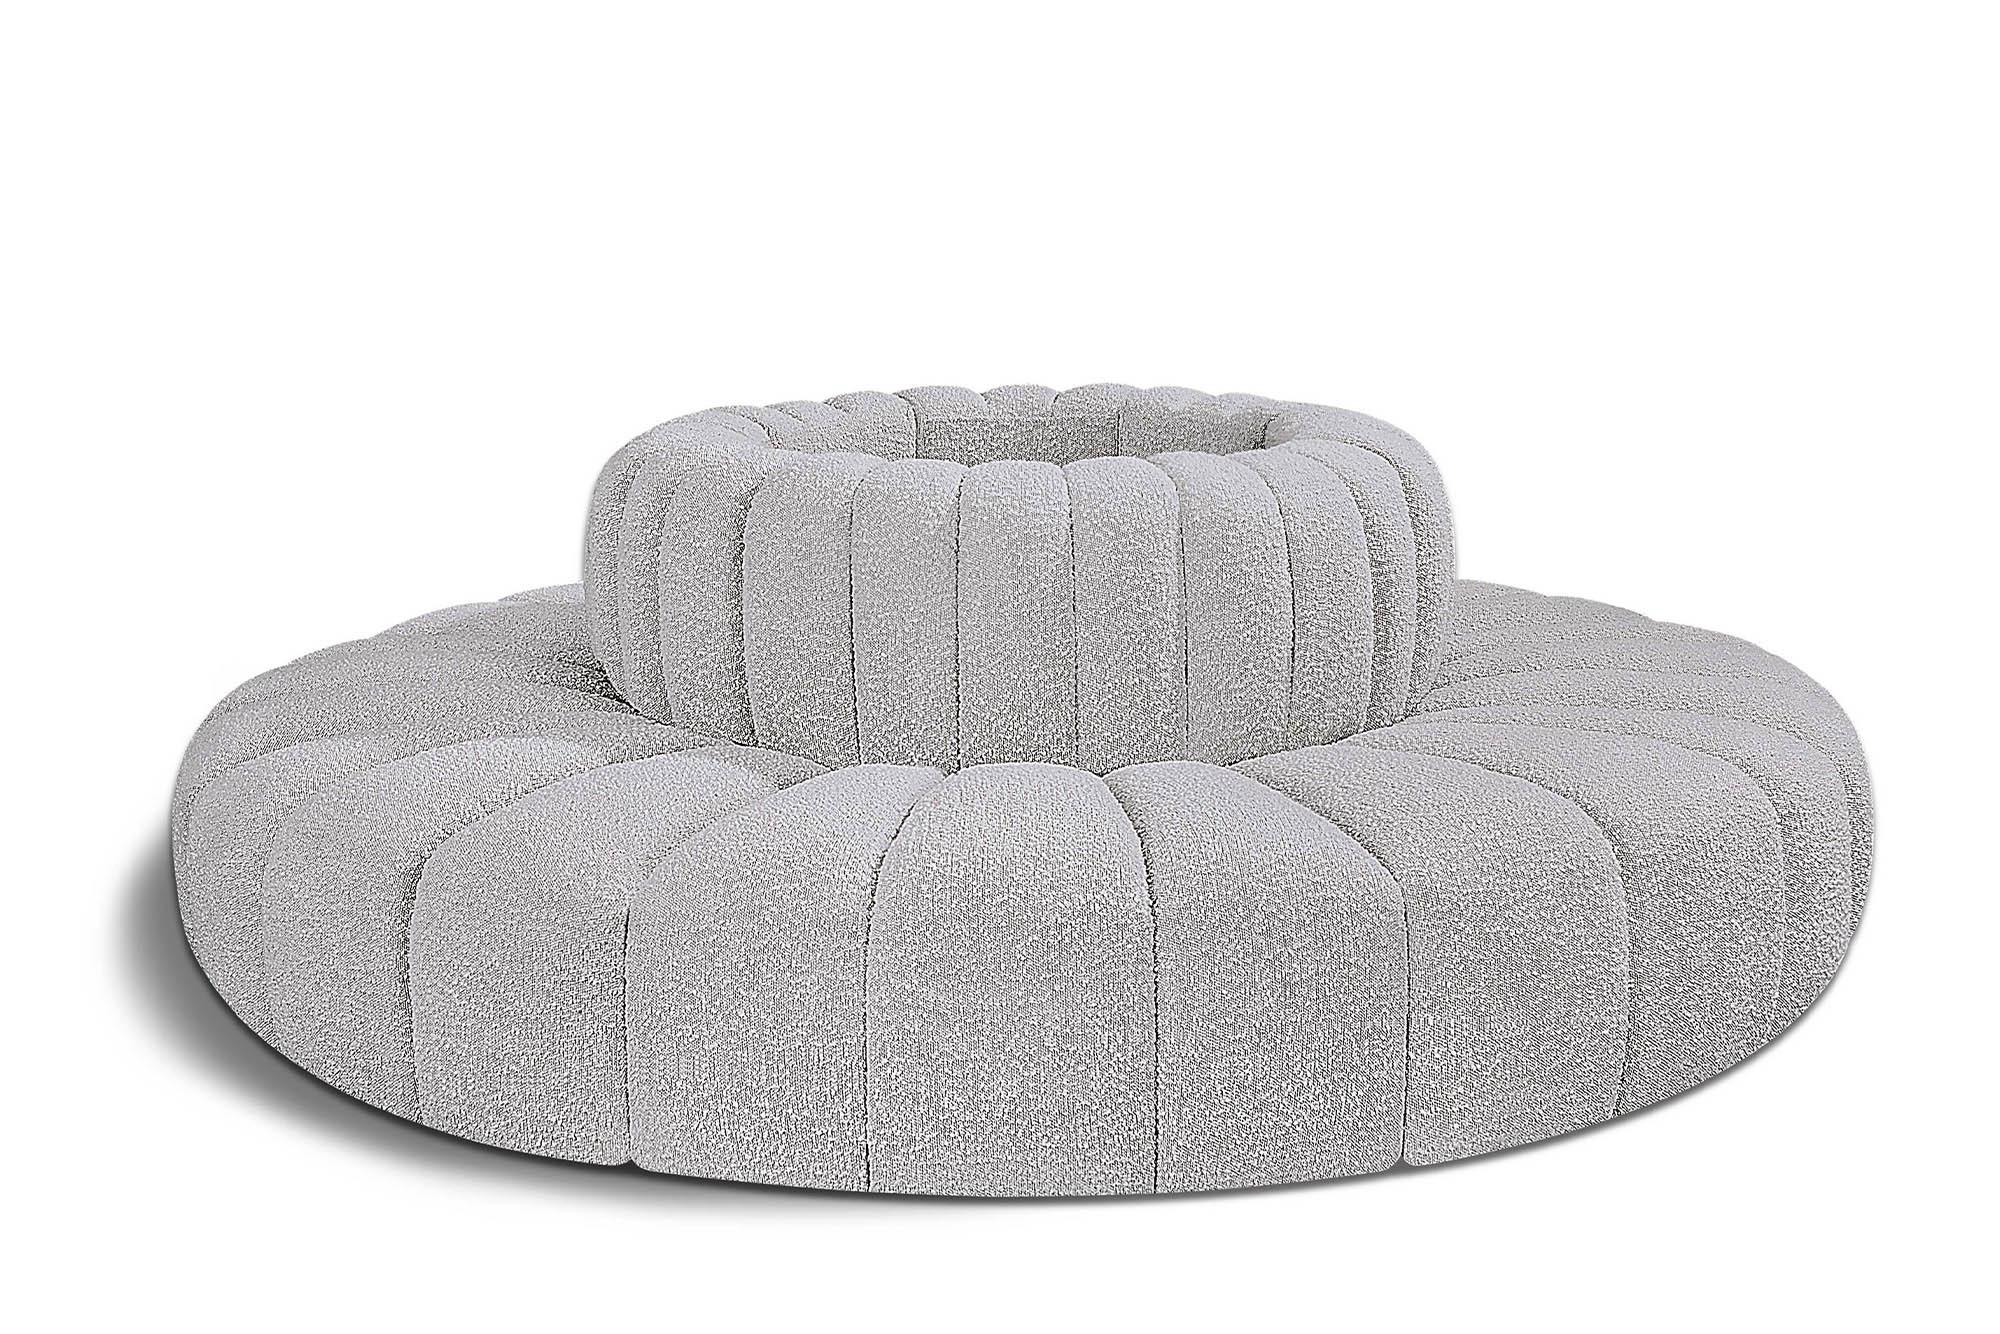 Contemporary, Modern Modular Sectional Sofa ARC 102Grey-S8D 102Grey-S8D in Gray 